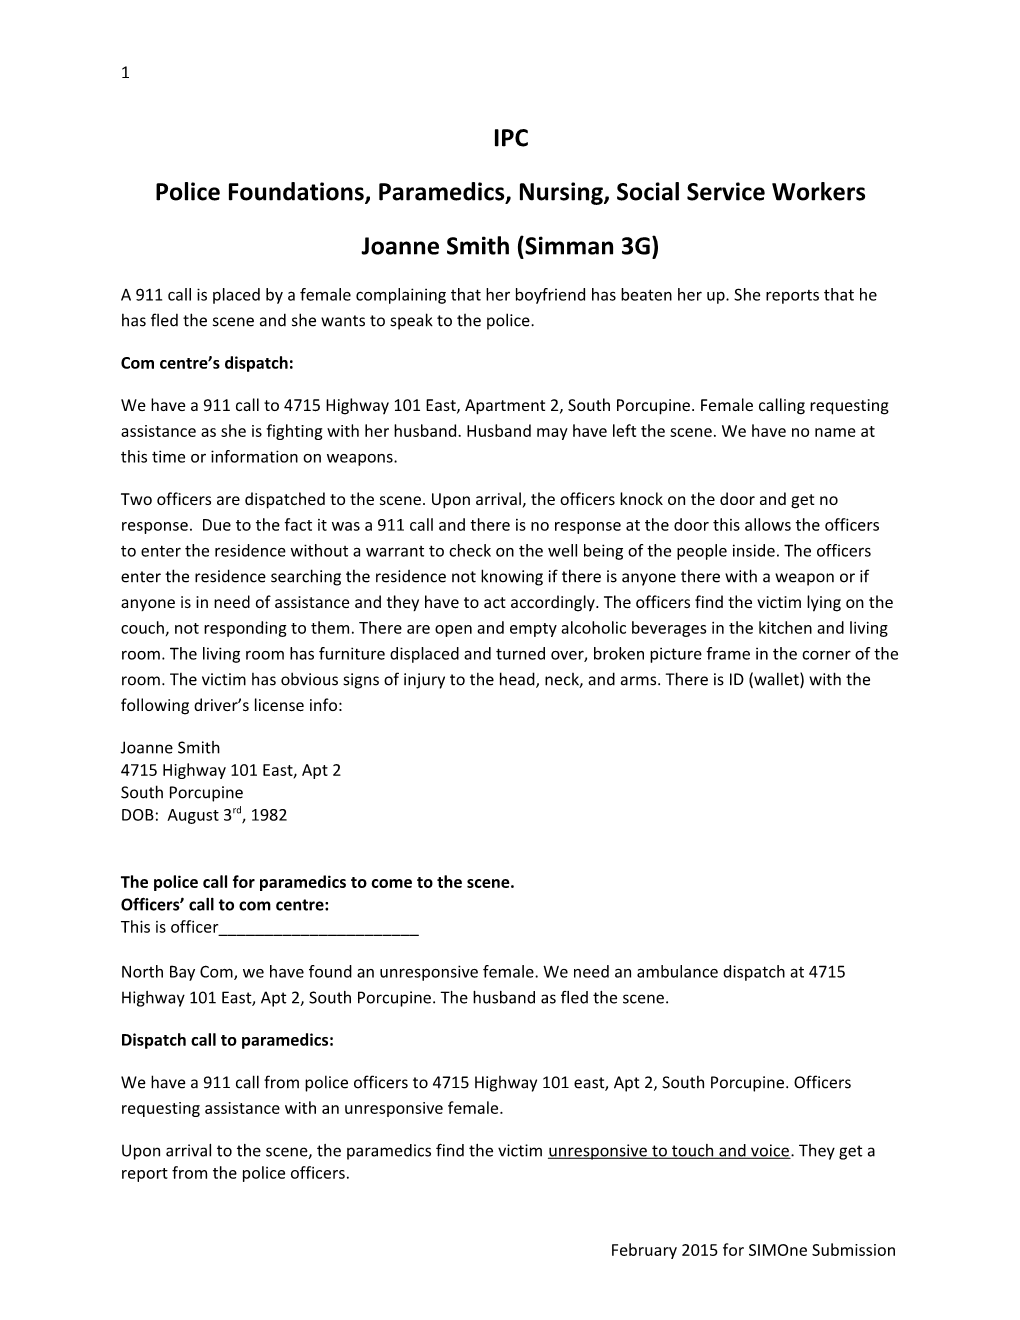 Police Foundations, Paramedics, Nursing, Social Service Workers